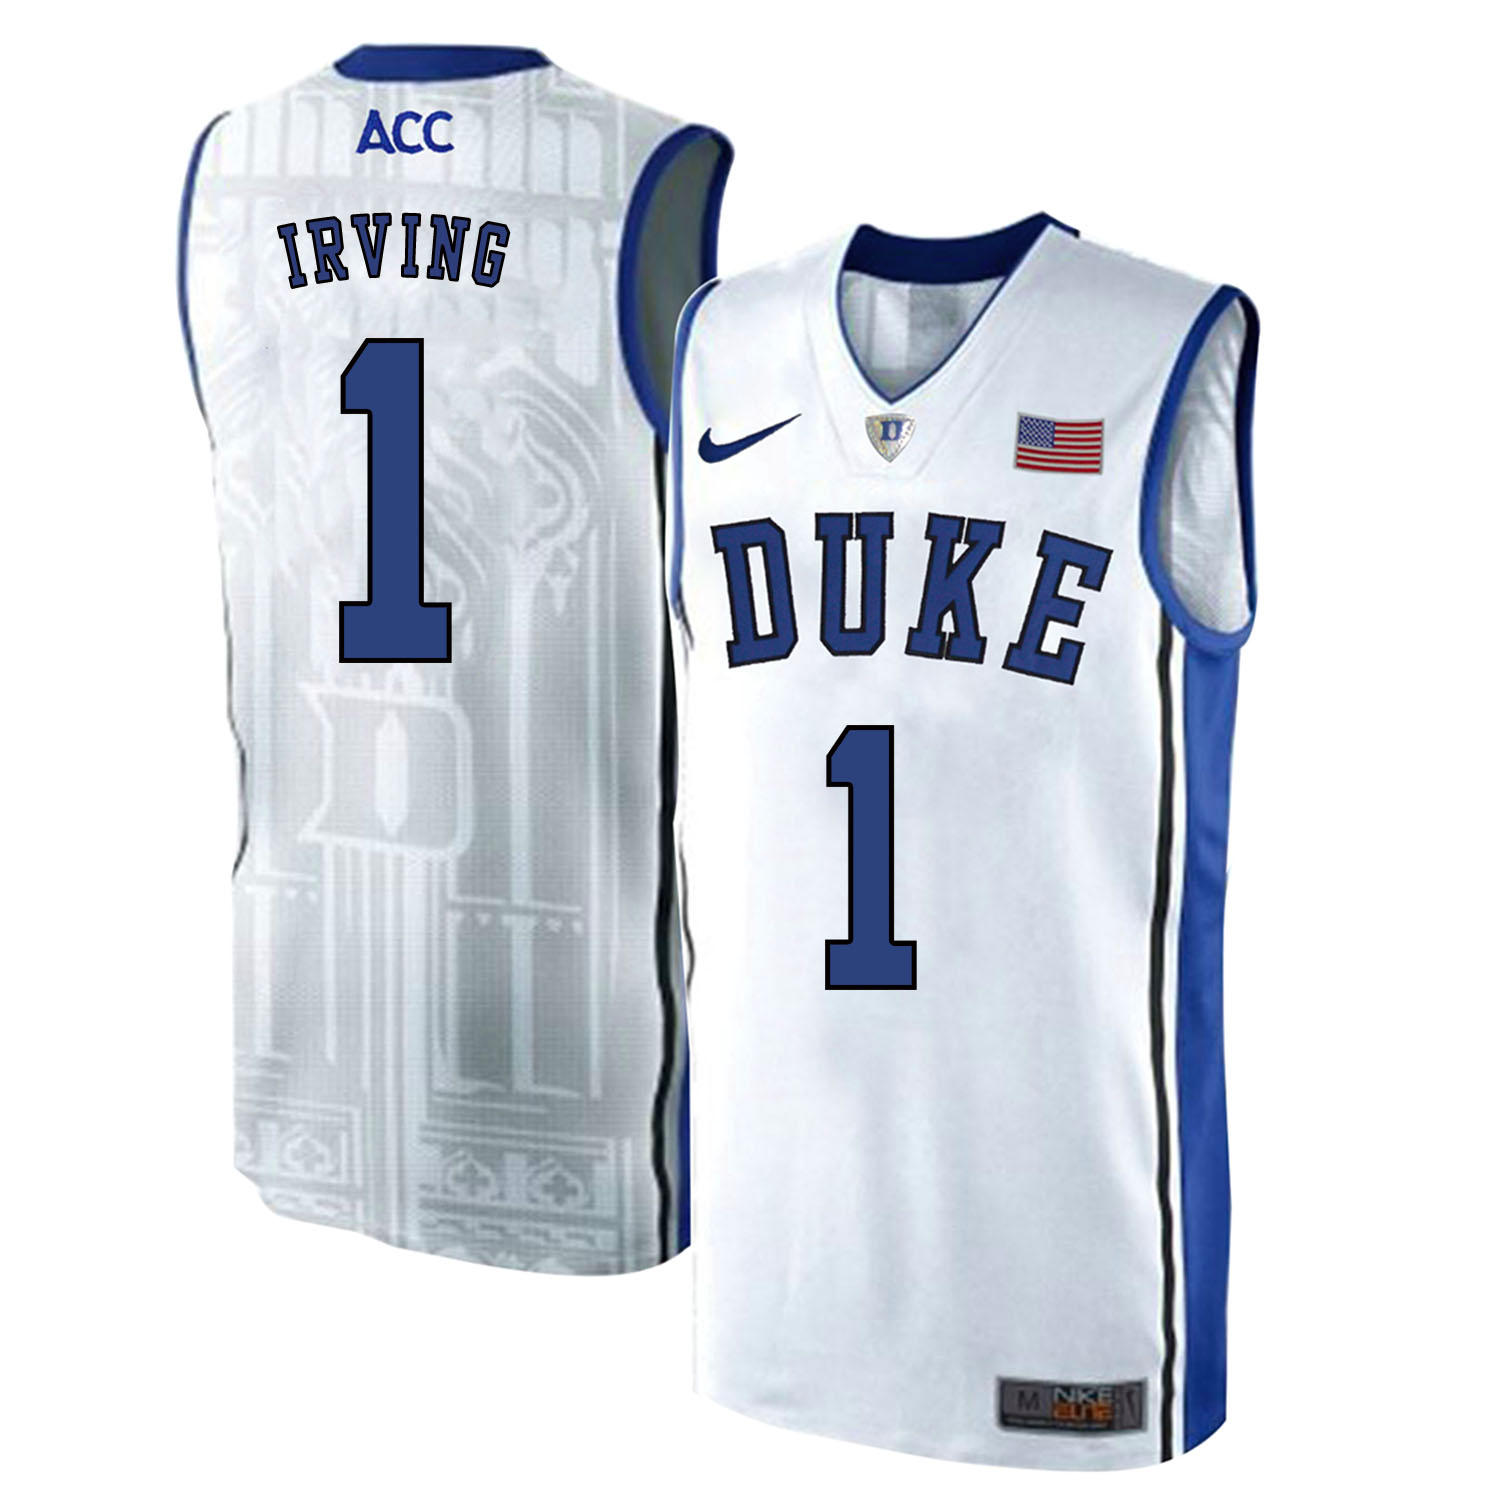 Duke Blue Devils 1 Kyrie Irving White Elite Nike College Basketabll Jersey